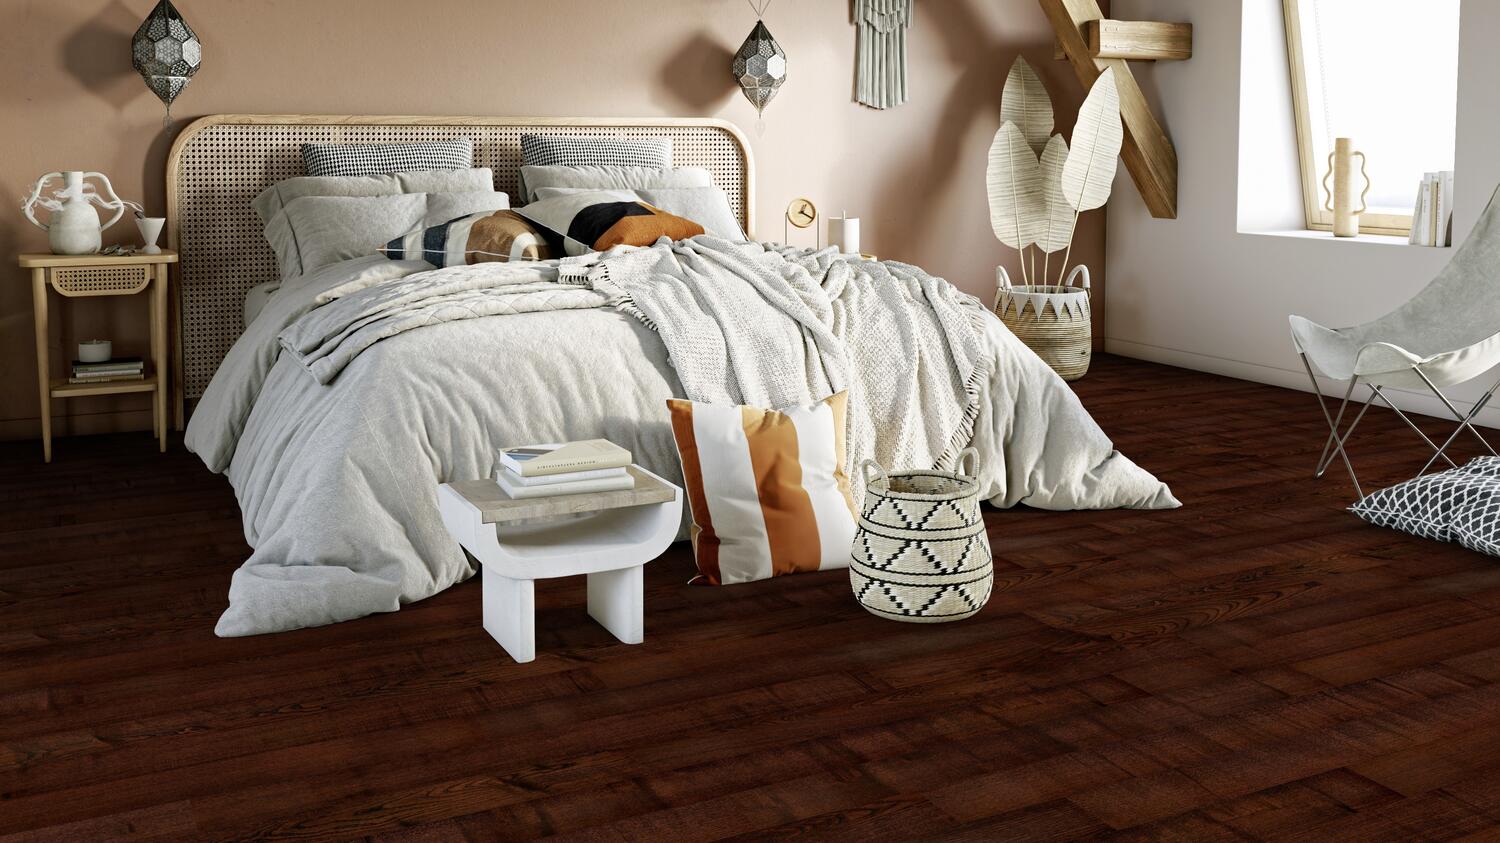 Dormitor modern cu parchet inchis la culoare